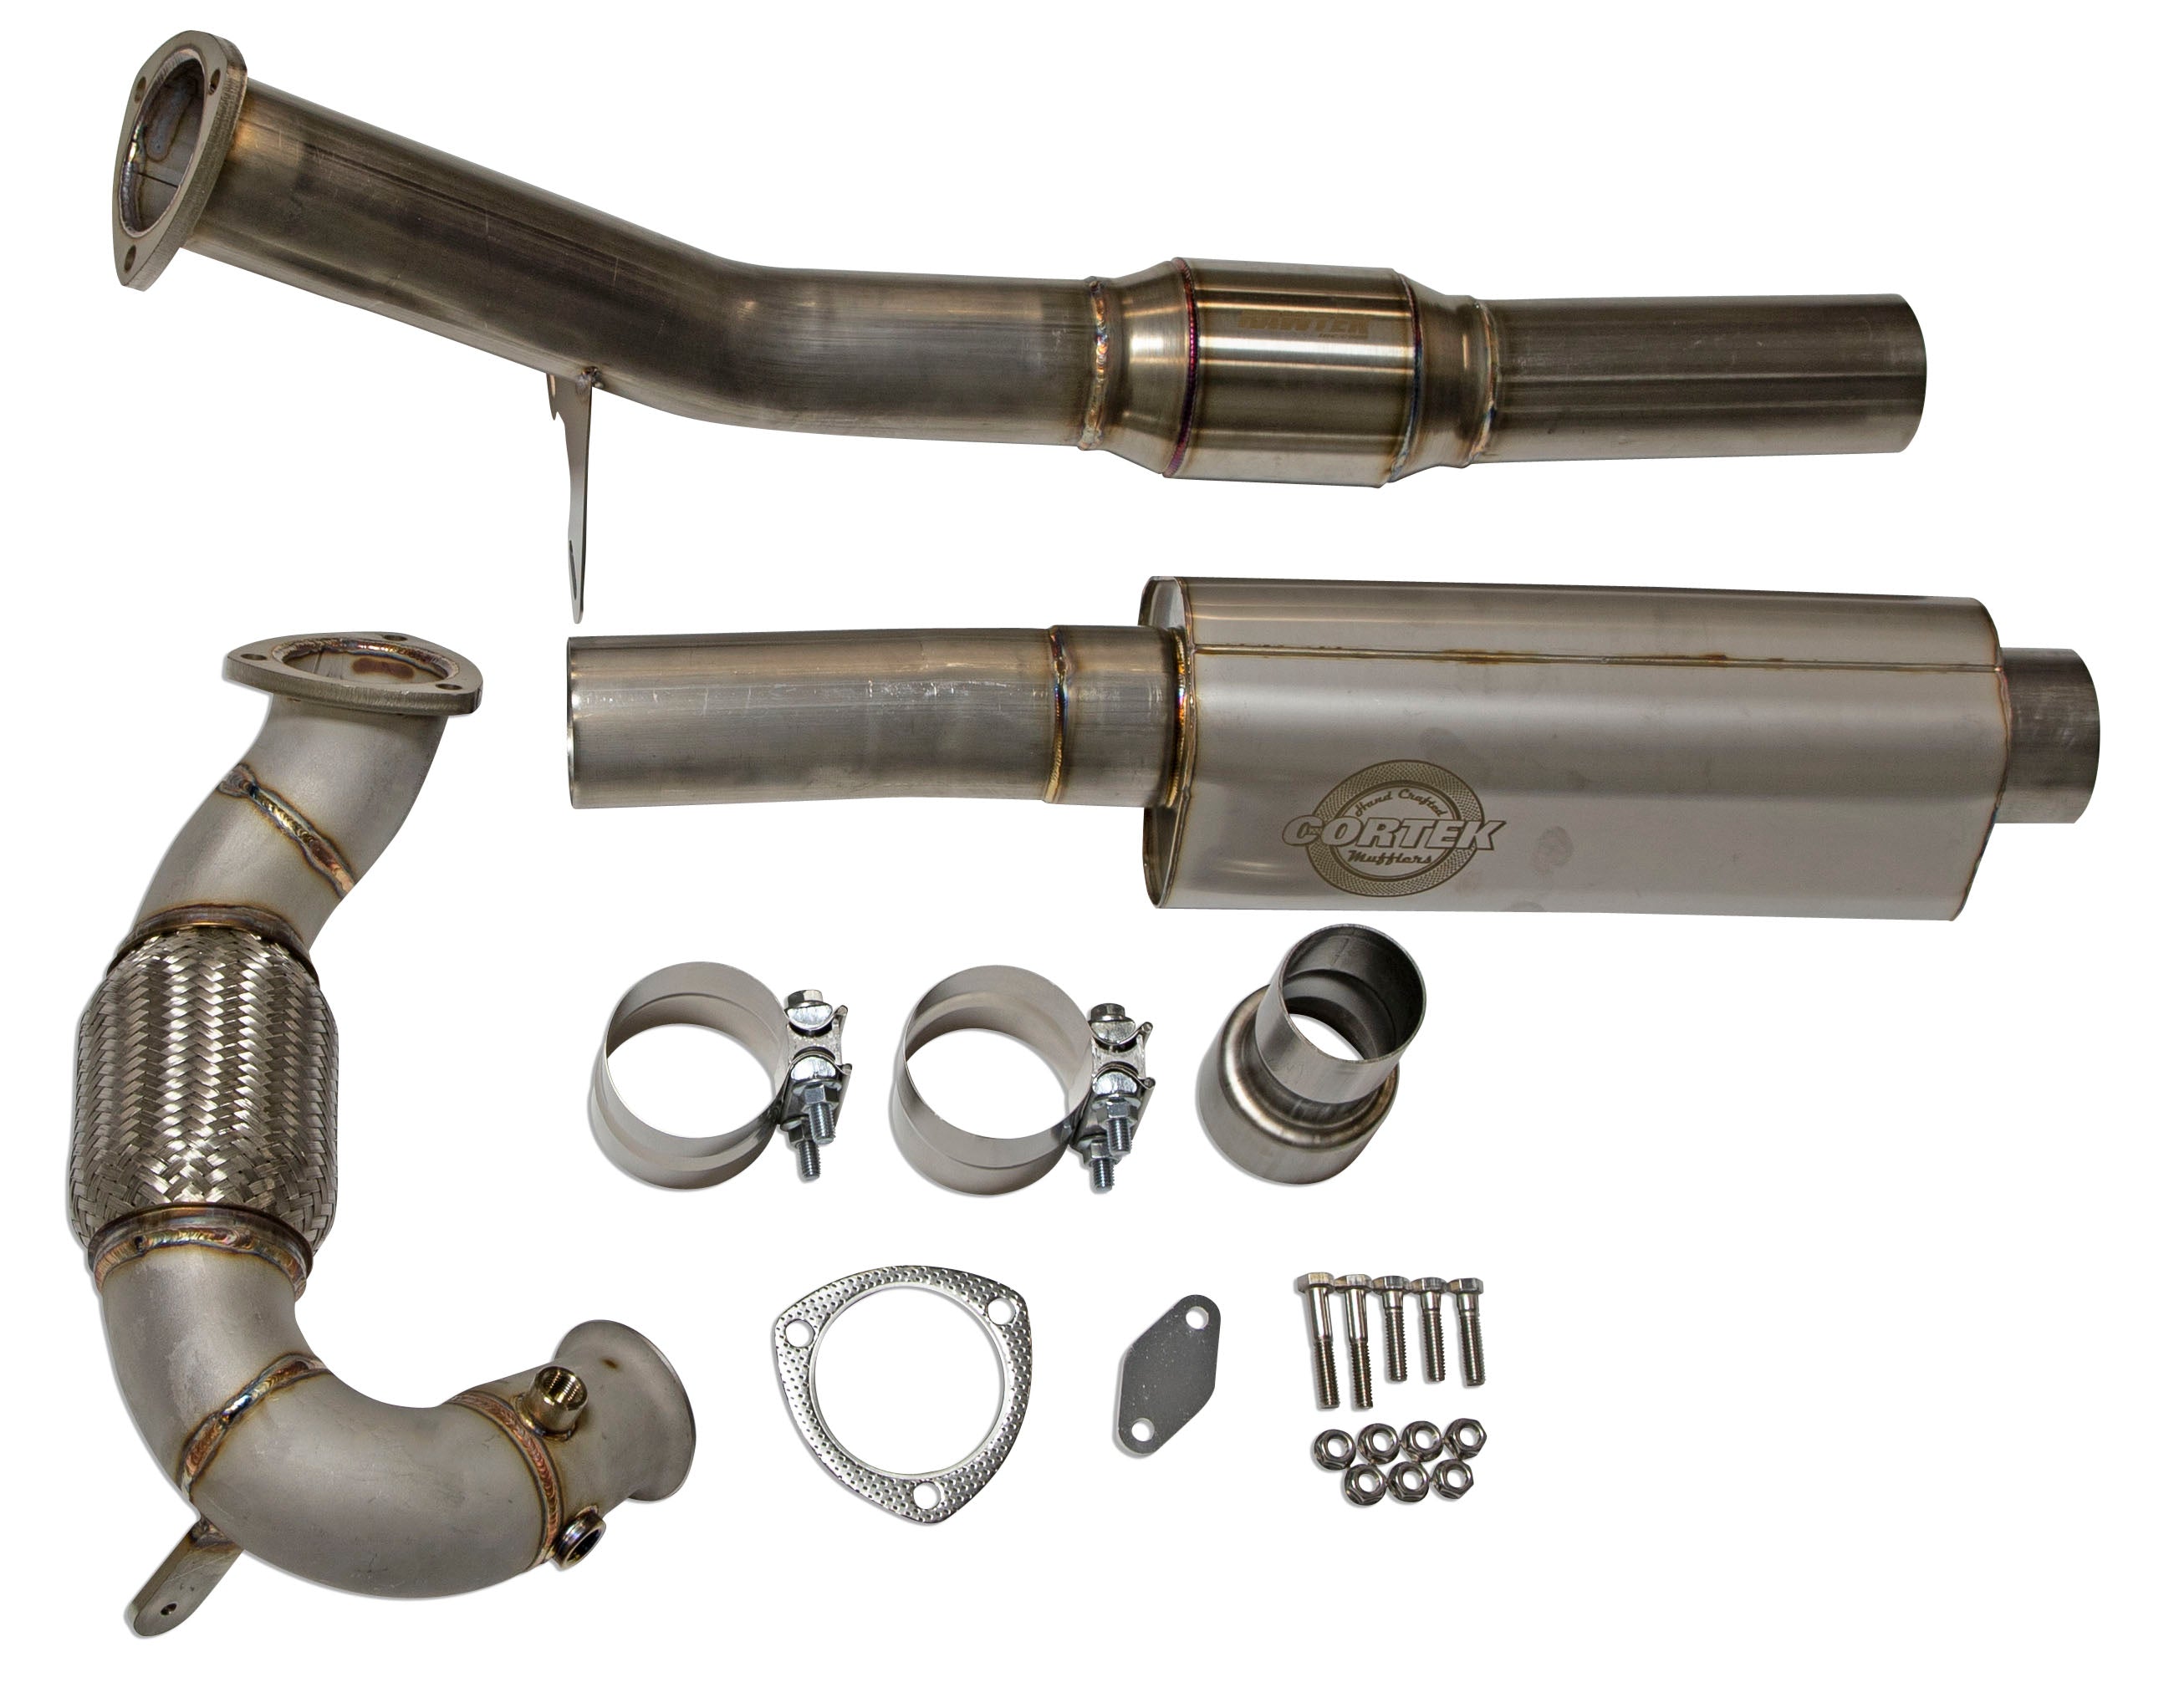 Passat TDI (12-14) DPF, EGR & Adblue Delete Exhaust ECO Parts Kit